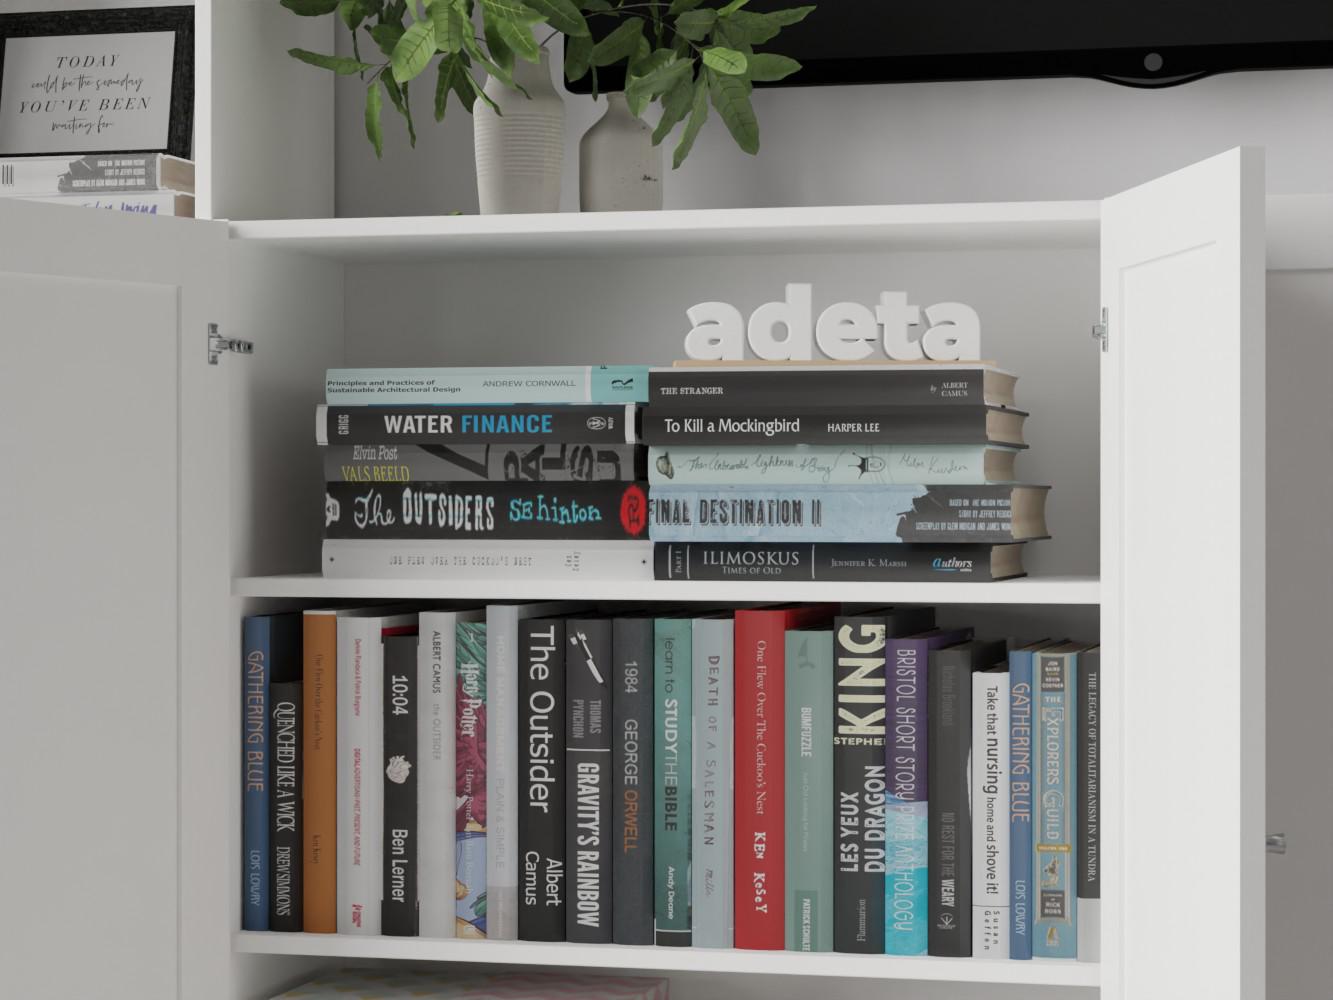 Книжный шкаф Билли 391 white ИКЕА (IKEA) изображение товара